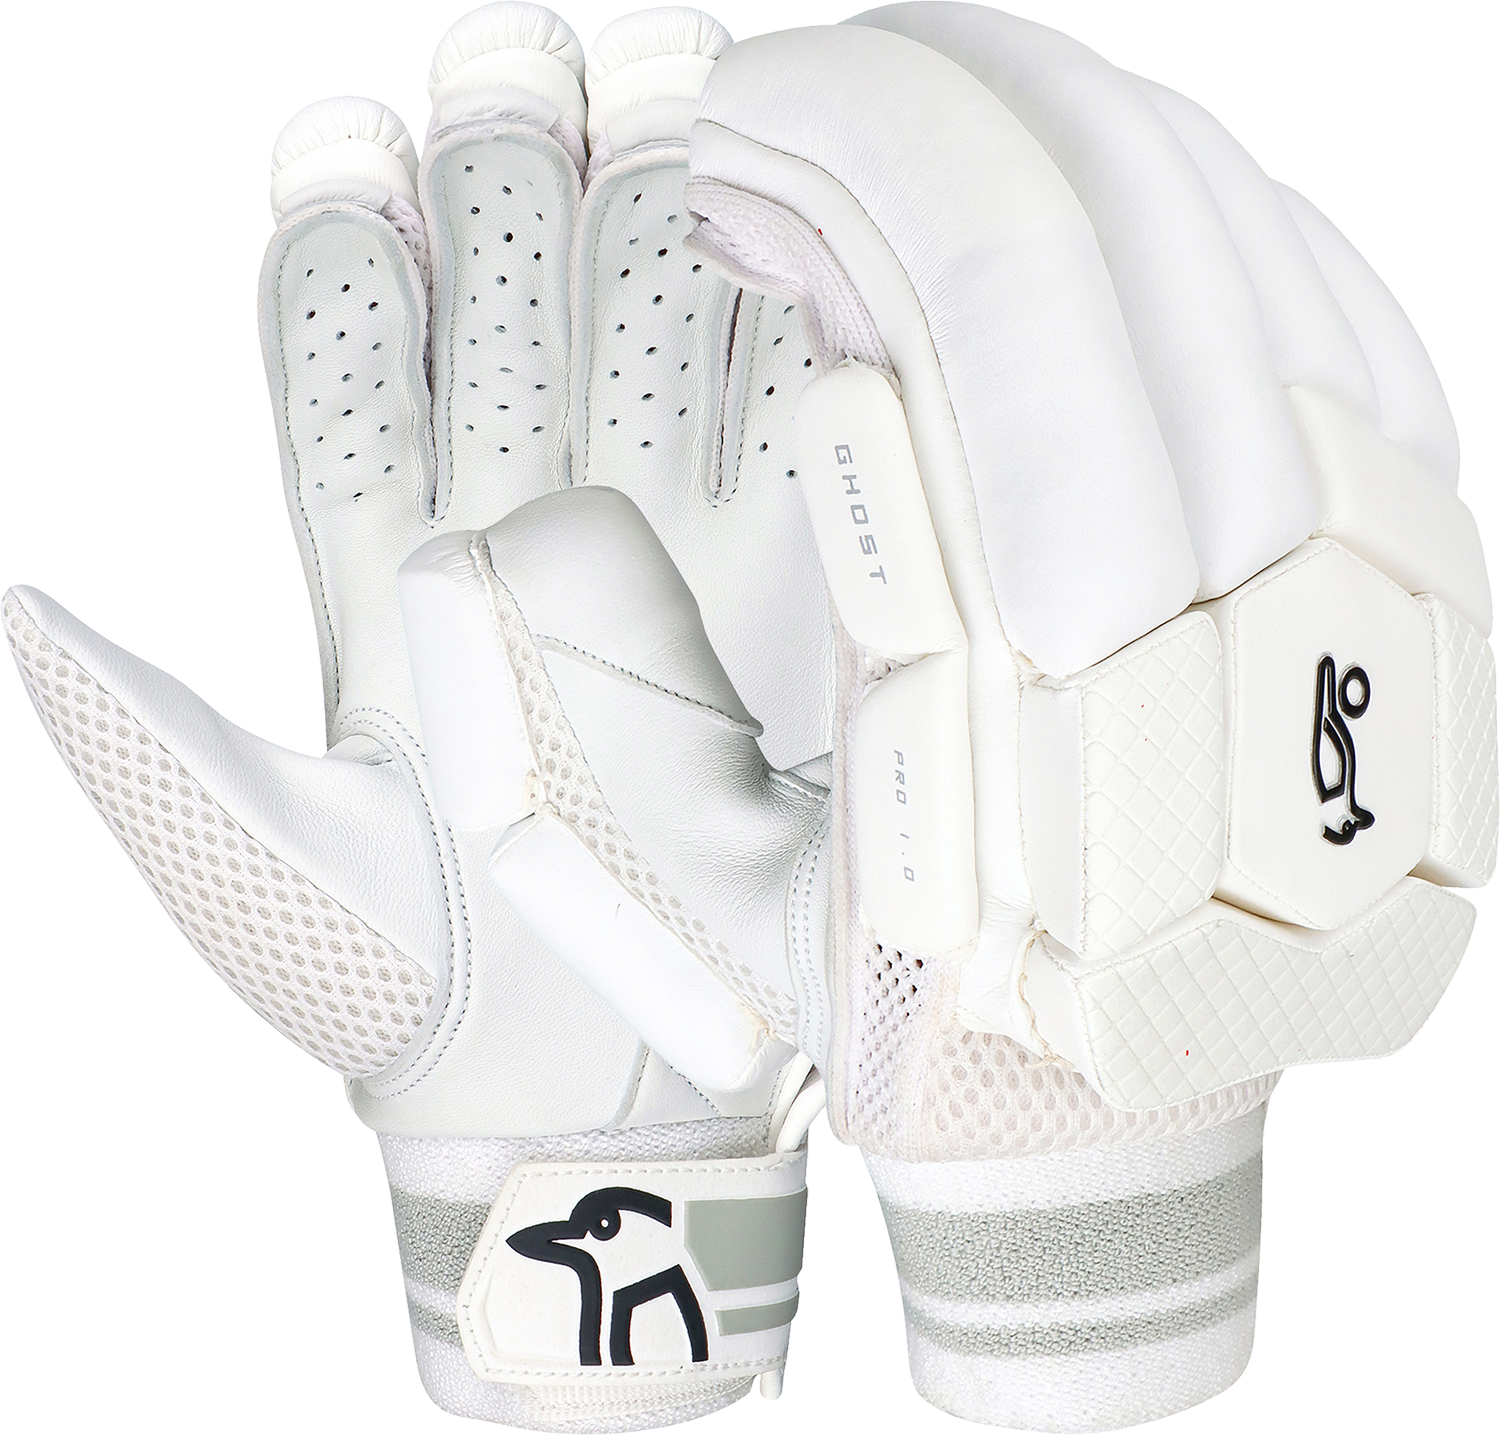 Kookaburra-Ghost-Pro-1.0-Batting-Gloves